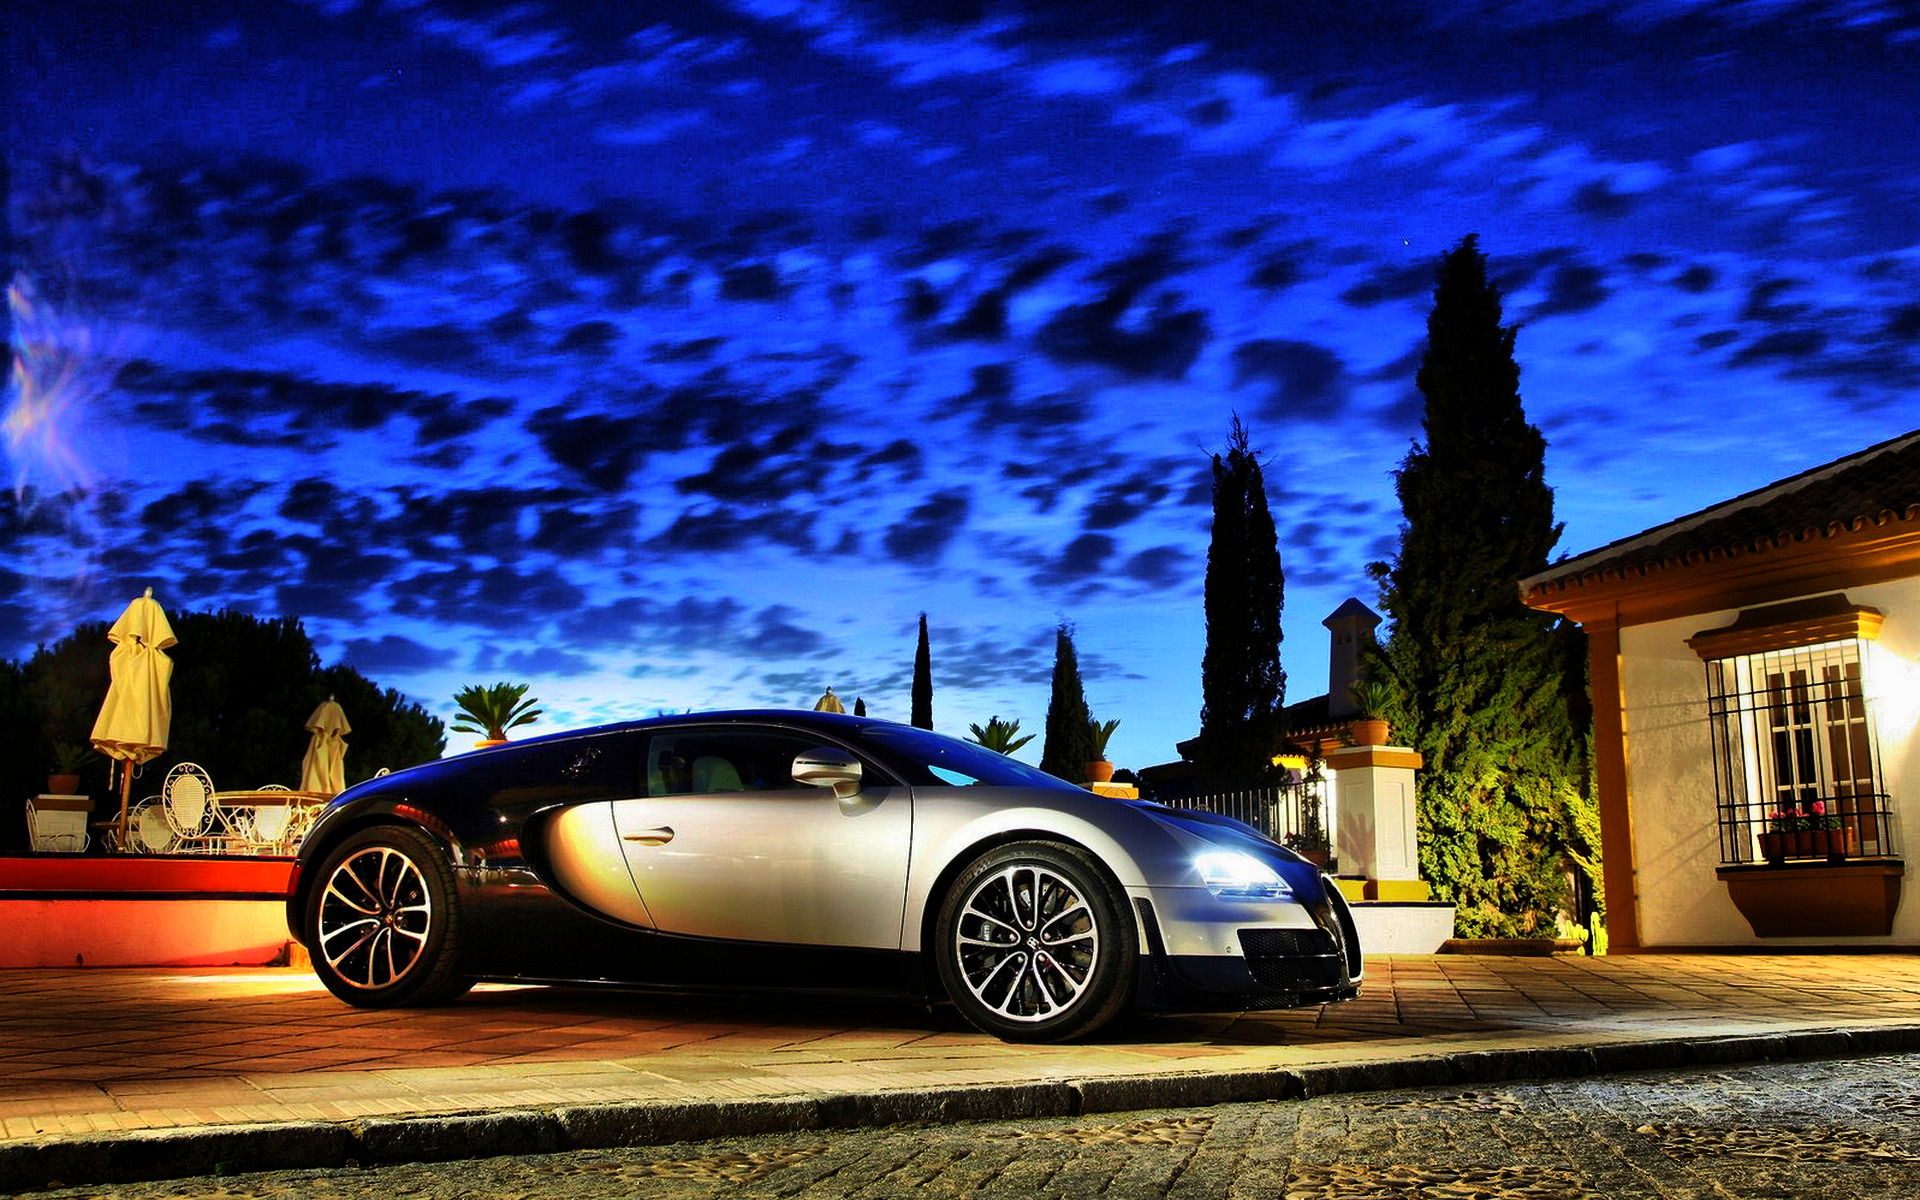 Bugatti, темный автомобиль, ночь, дом, фары, небо, заставки, фото, The Bugatti, a dark car, night, home, lights, sky, wallpaper, photo